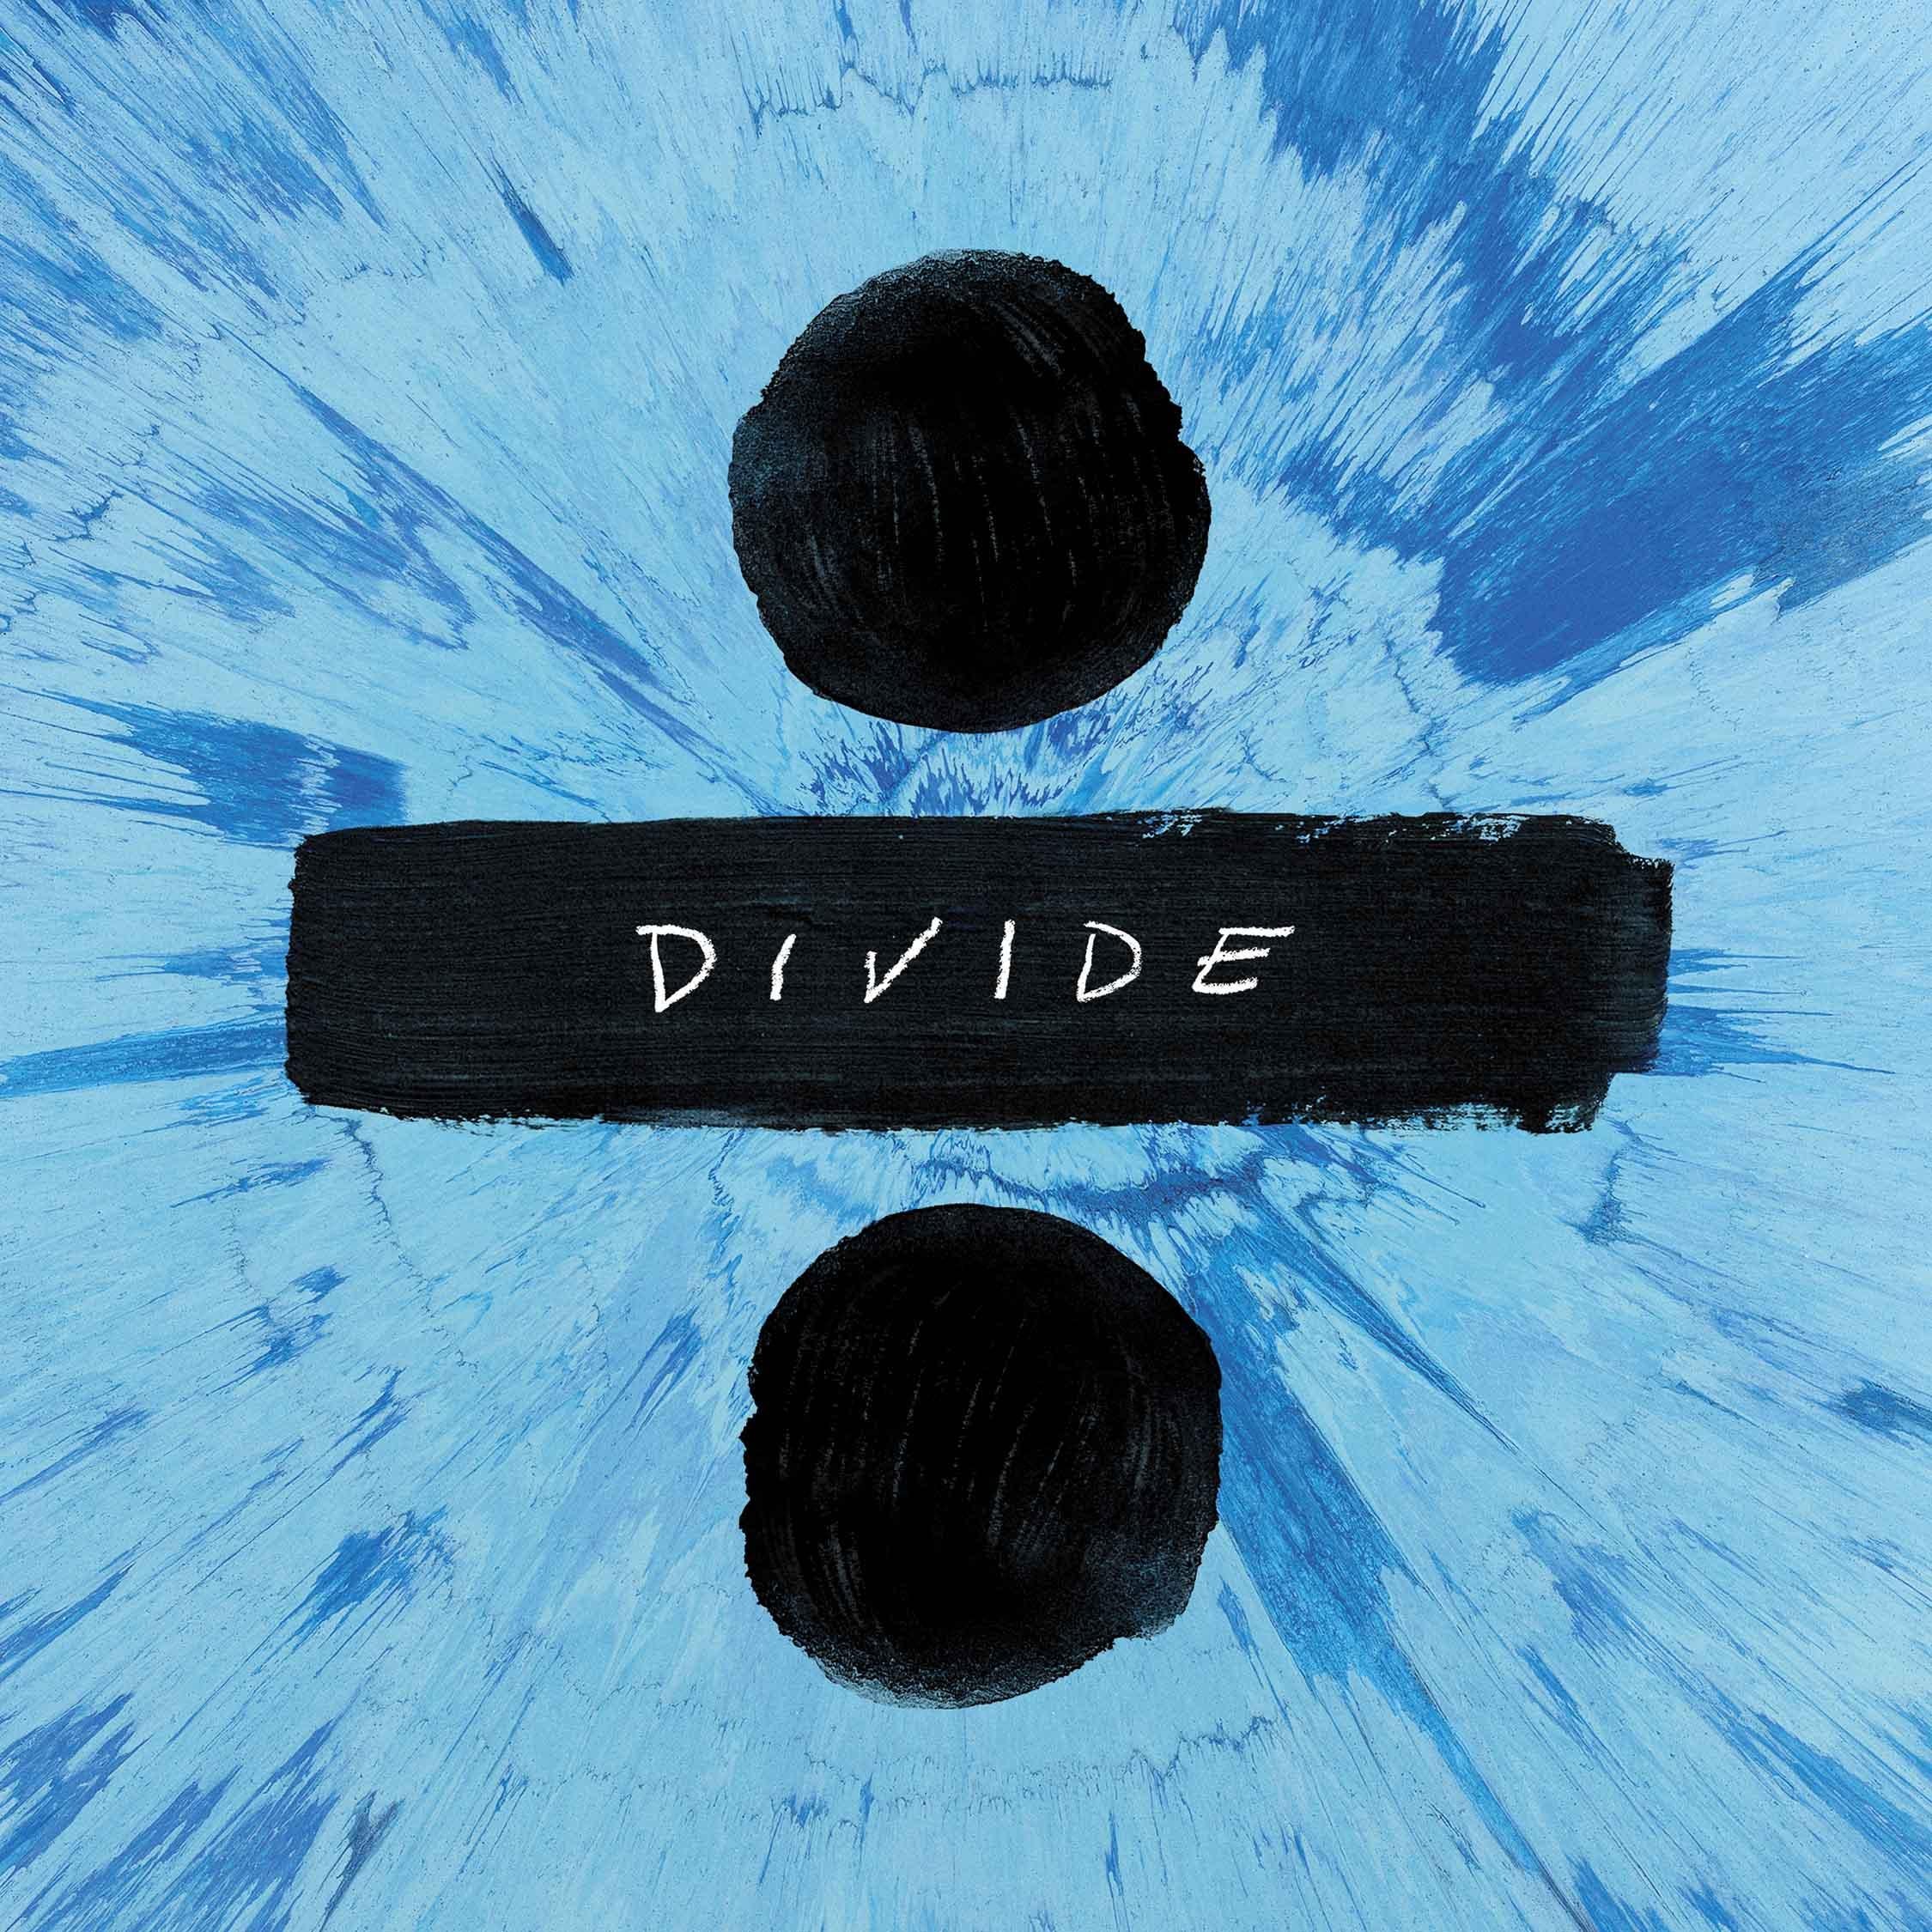 Ed Sheeran, Divide, album review: Singer songwriter's third record